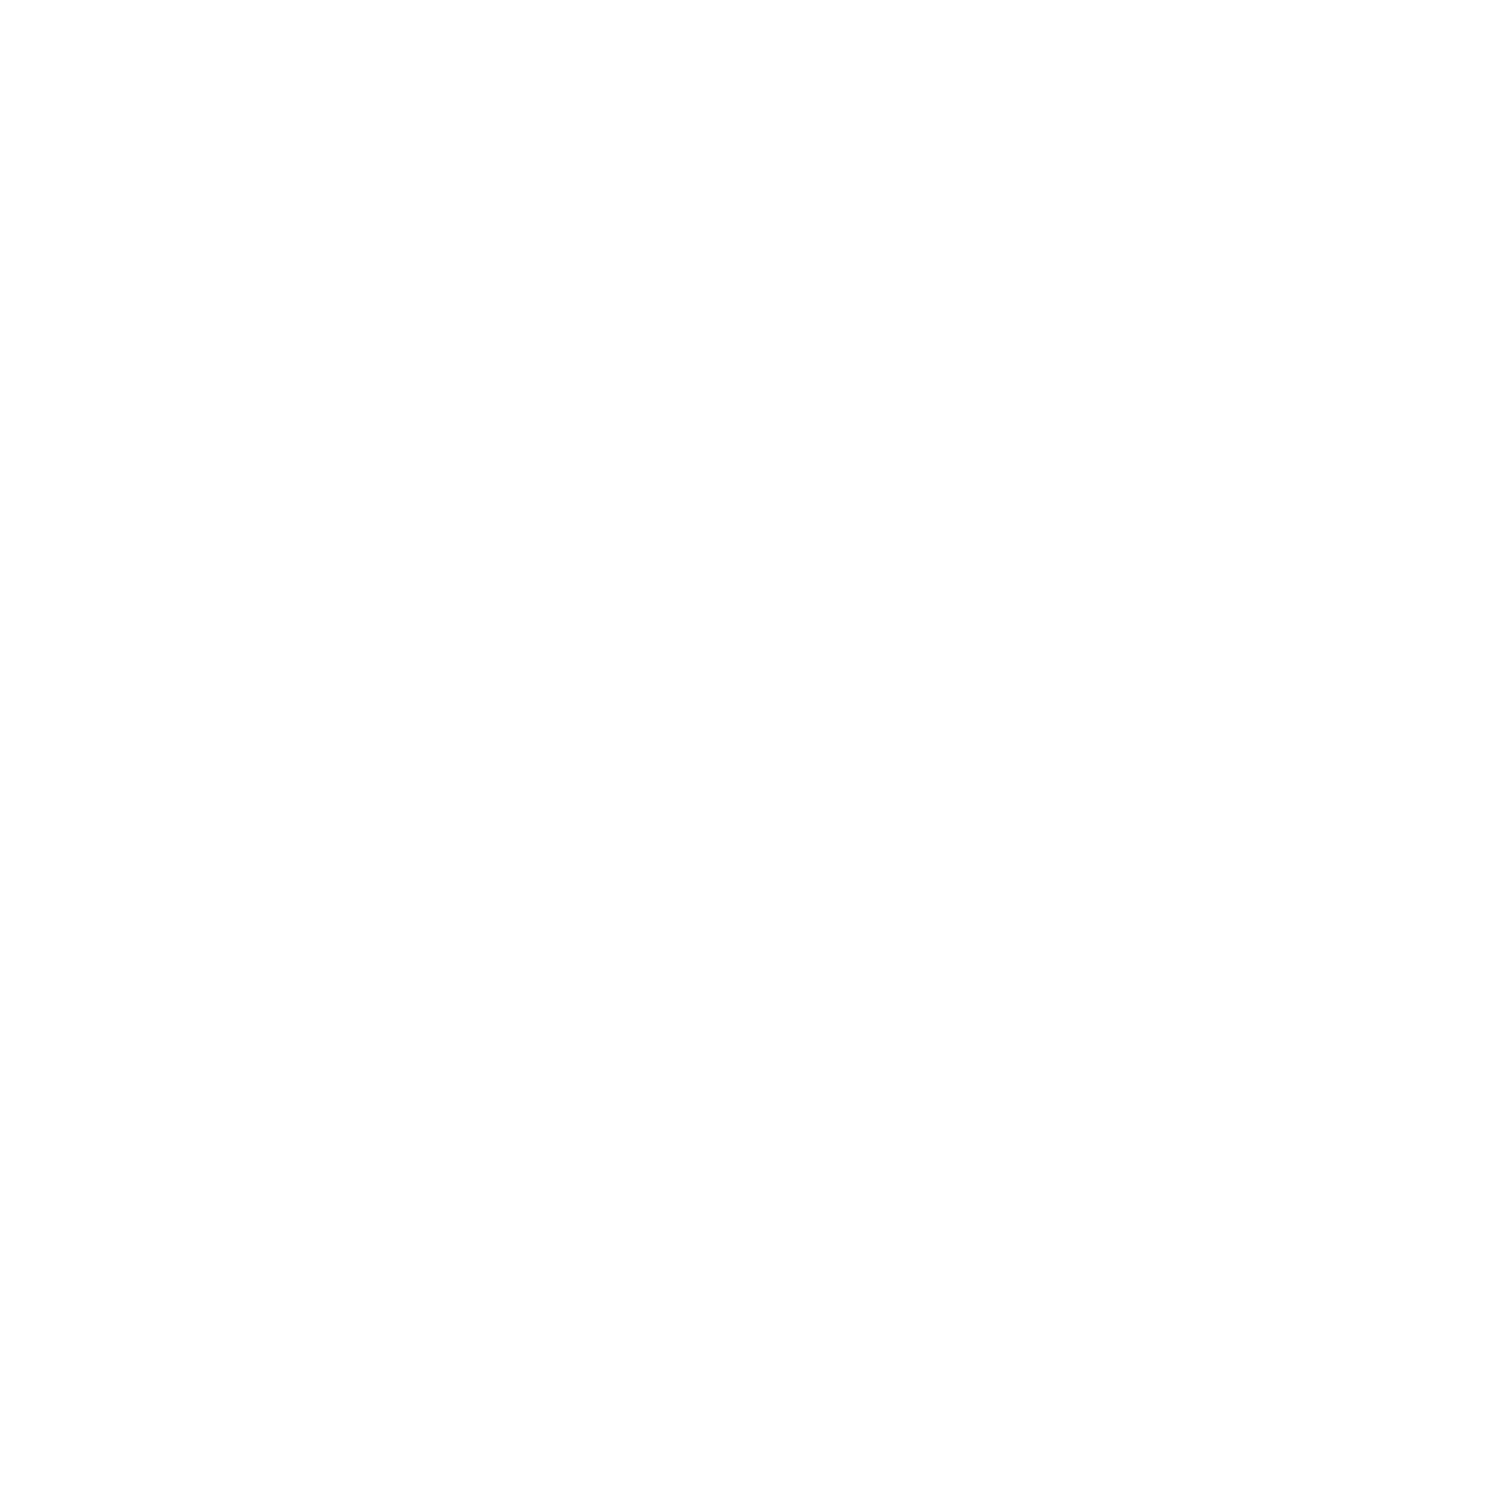 Sidewalk Side Properties